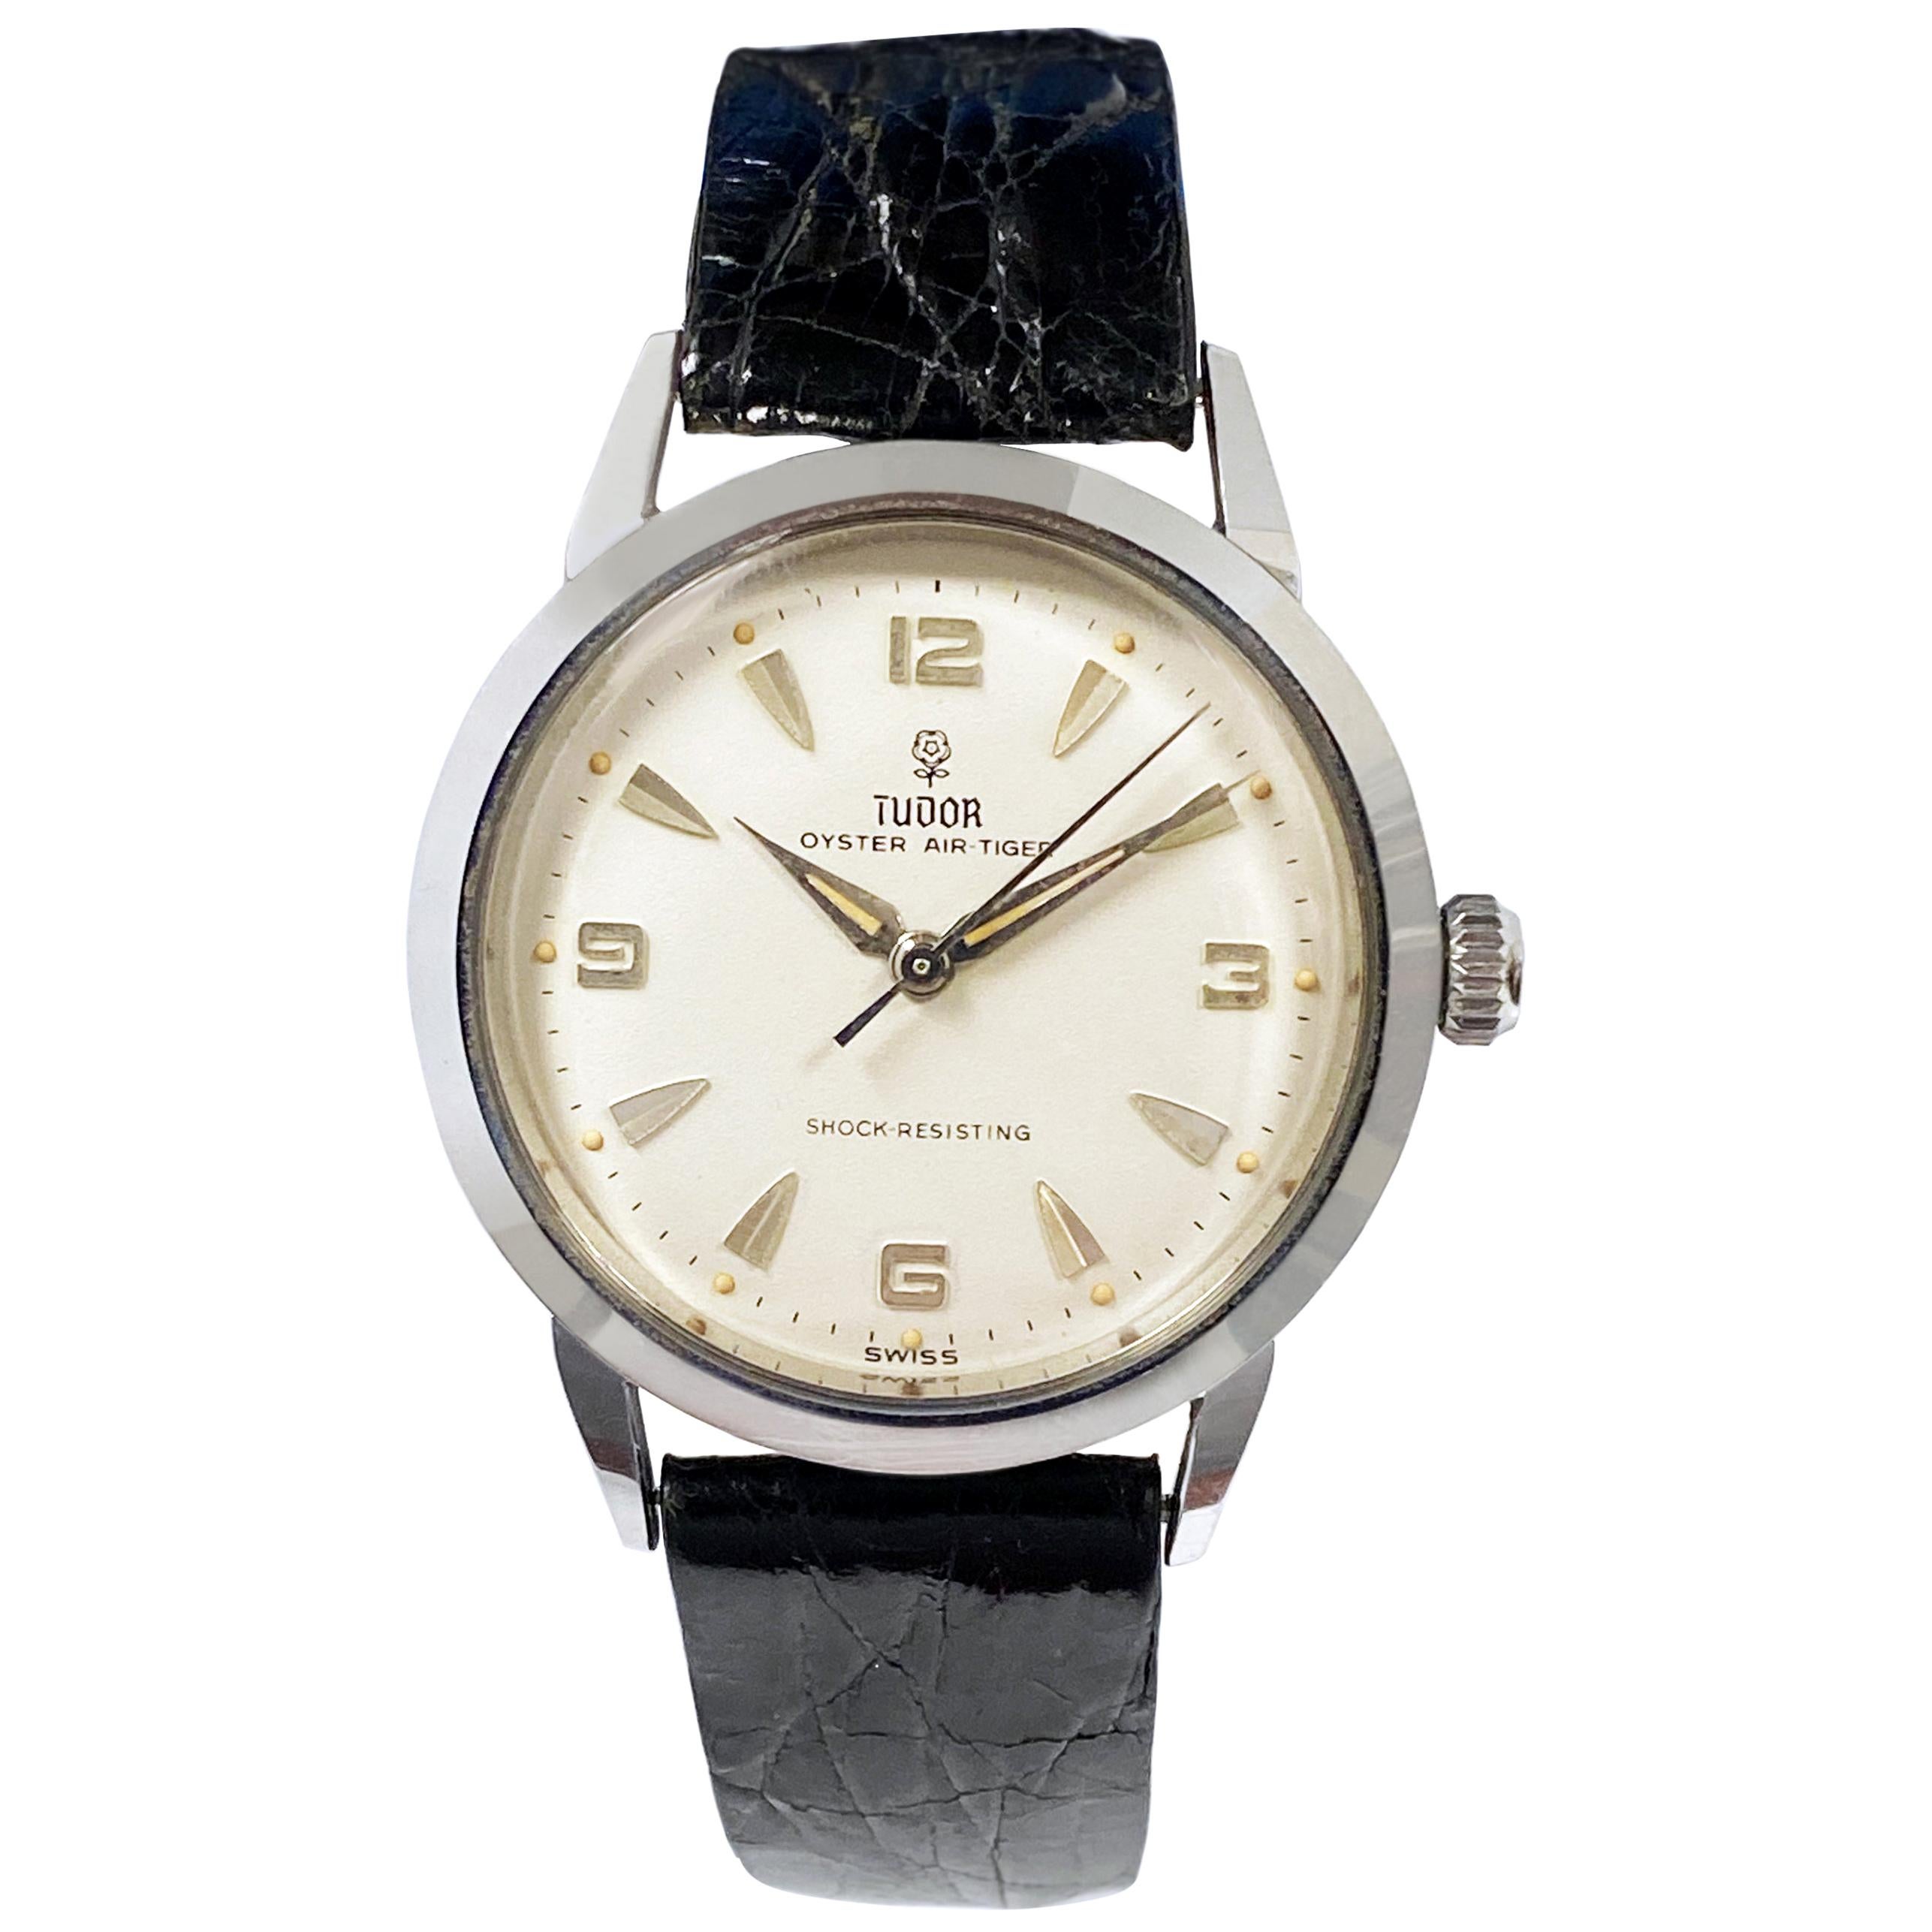 Tudor Oyster Air-Tiger Ref 7957 Vintage Mechanical Wrist Watch